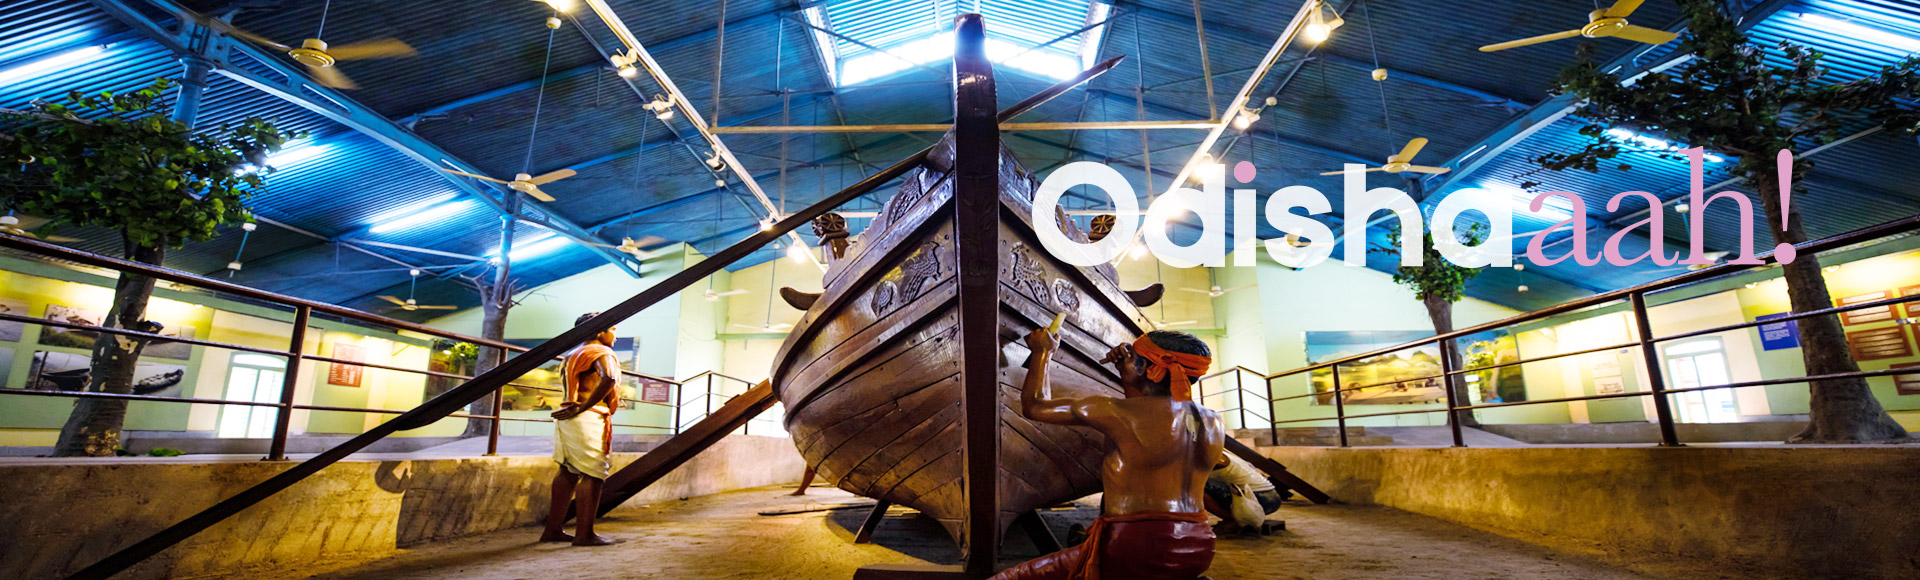 odisha state maritime museum